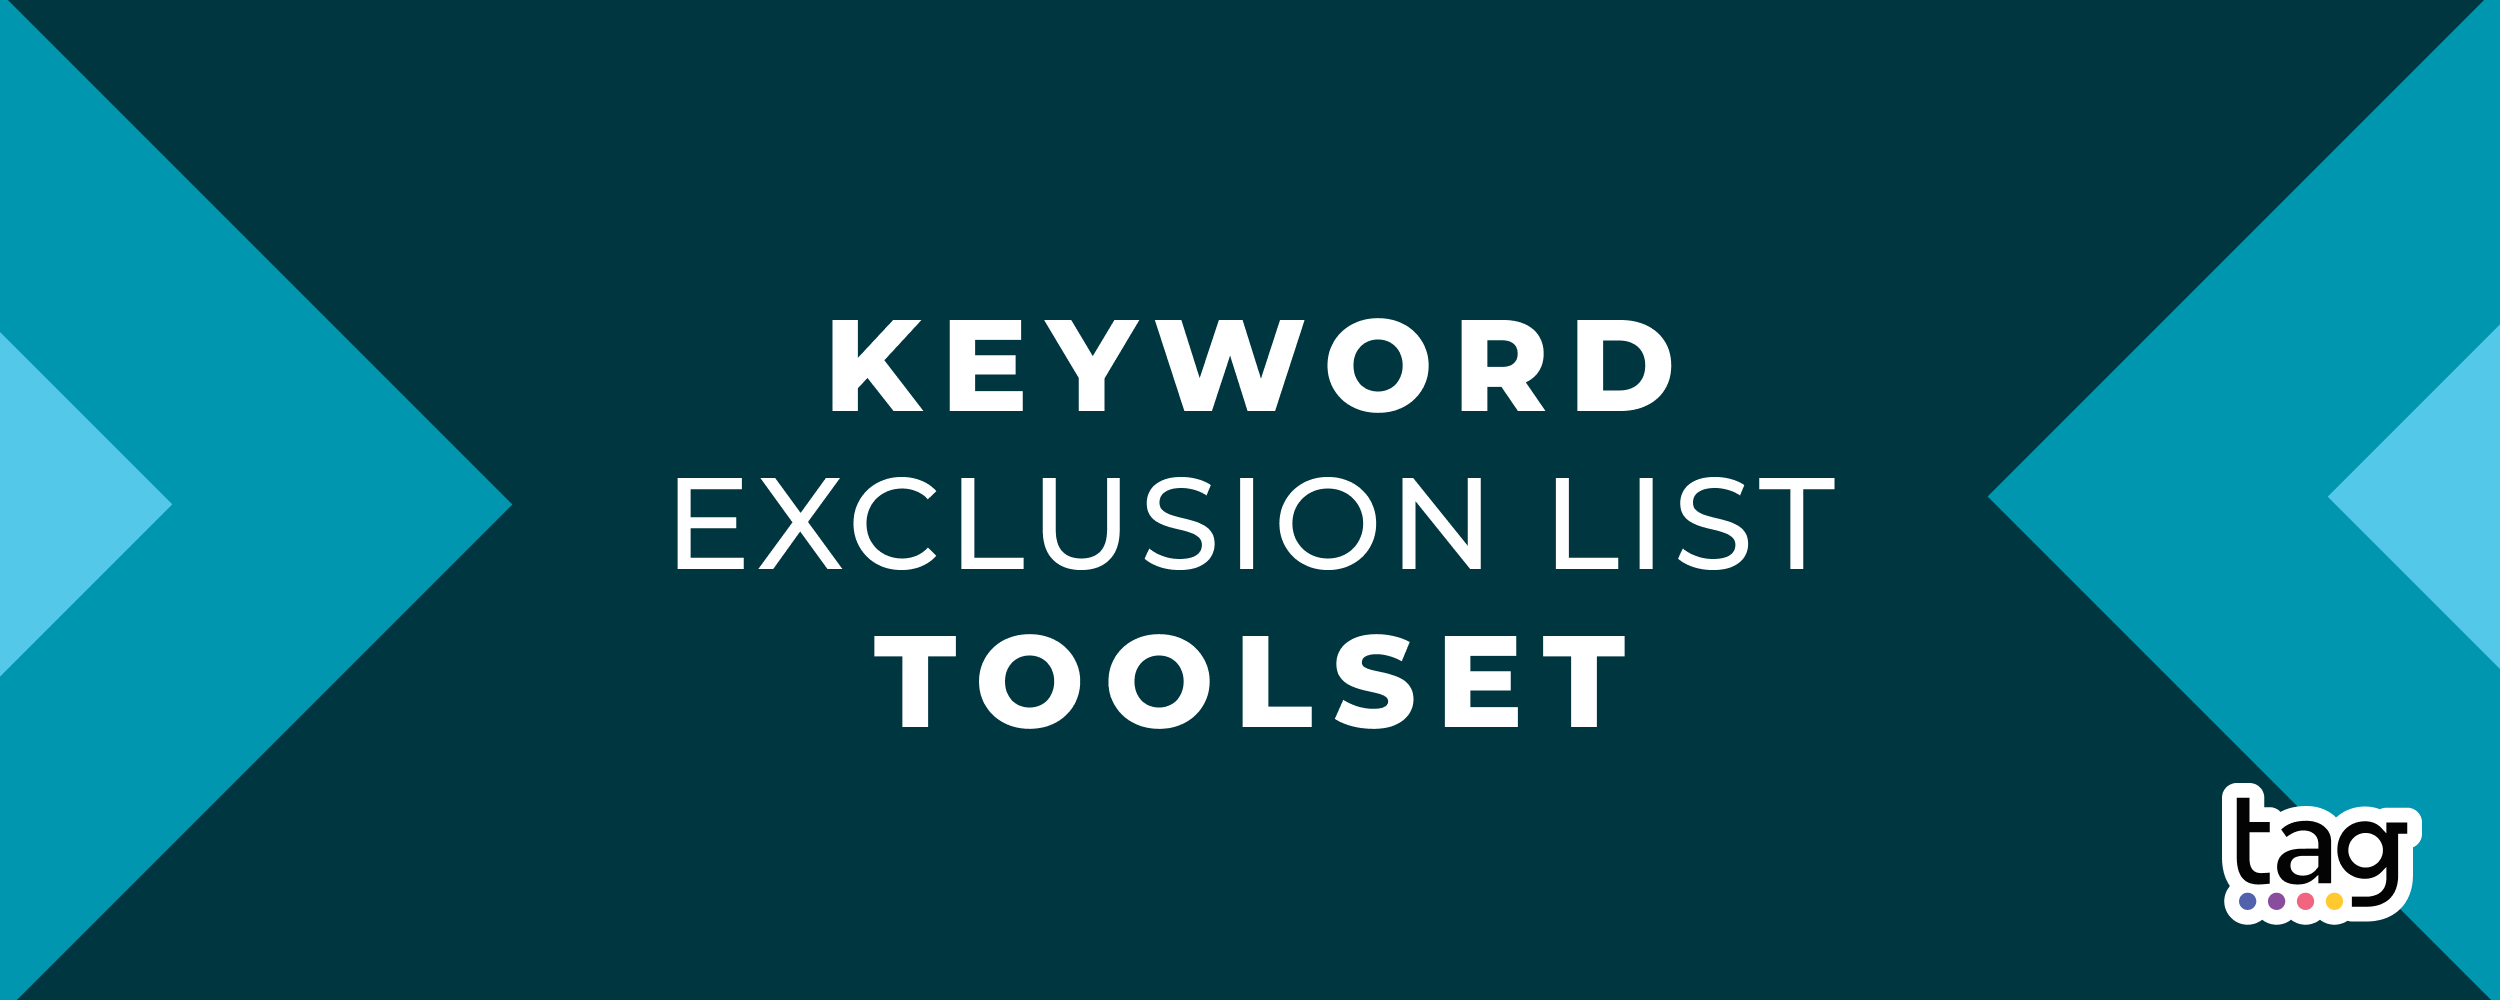 Keyword Exclusion_Topbanner-min